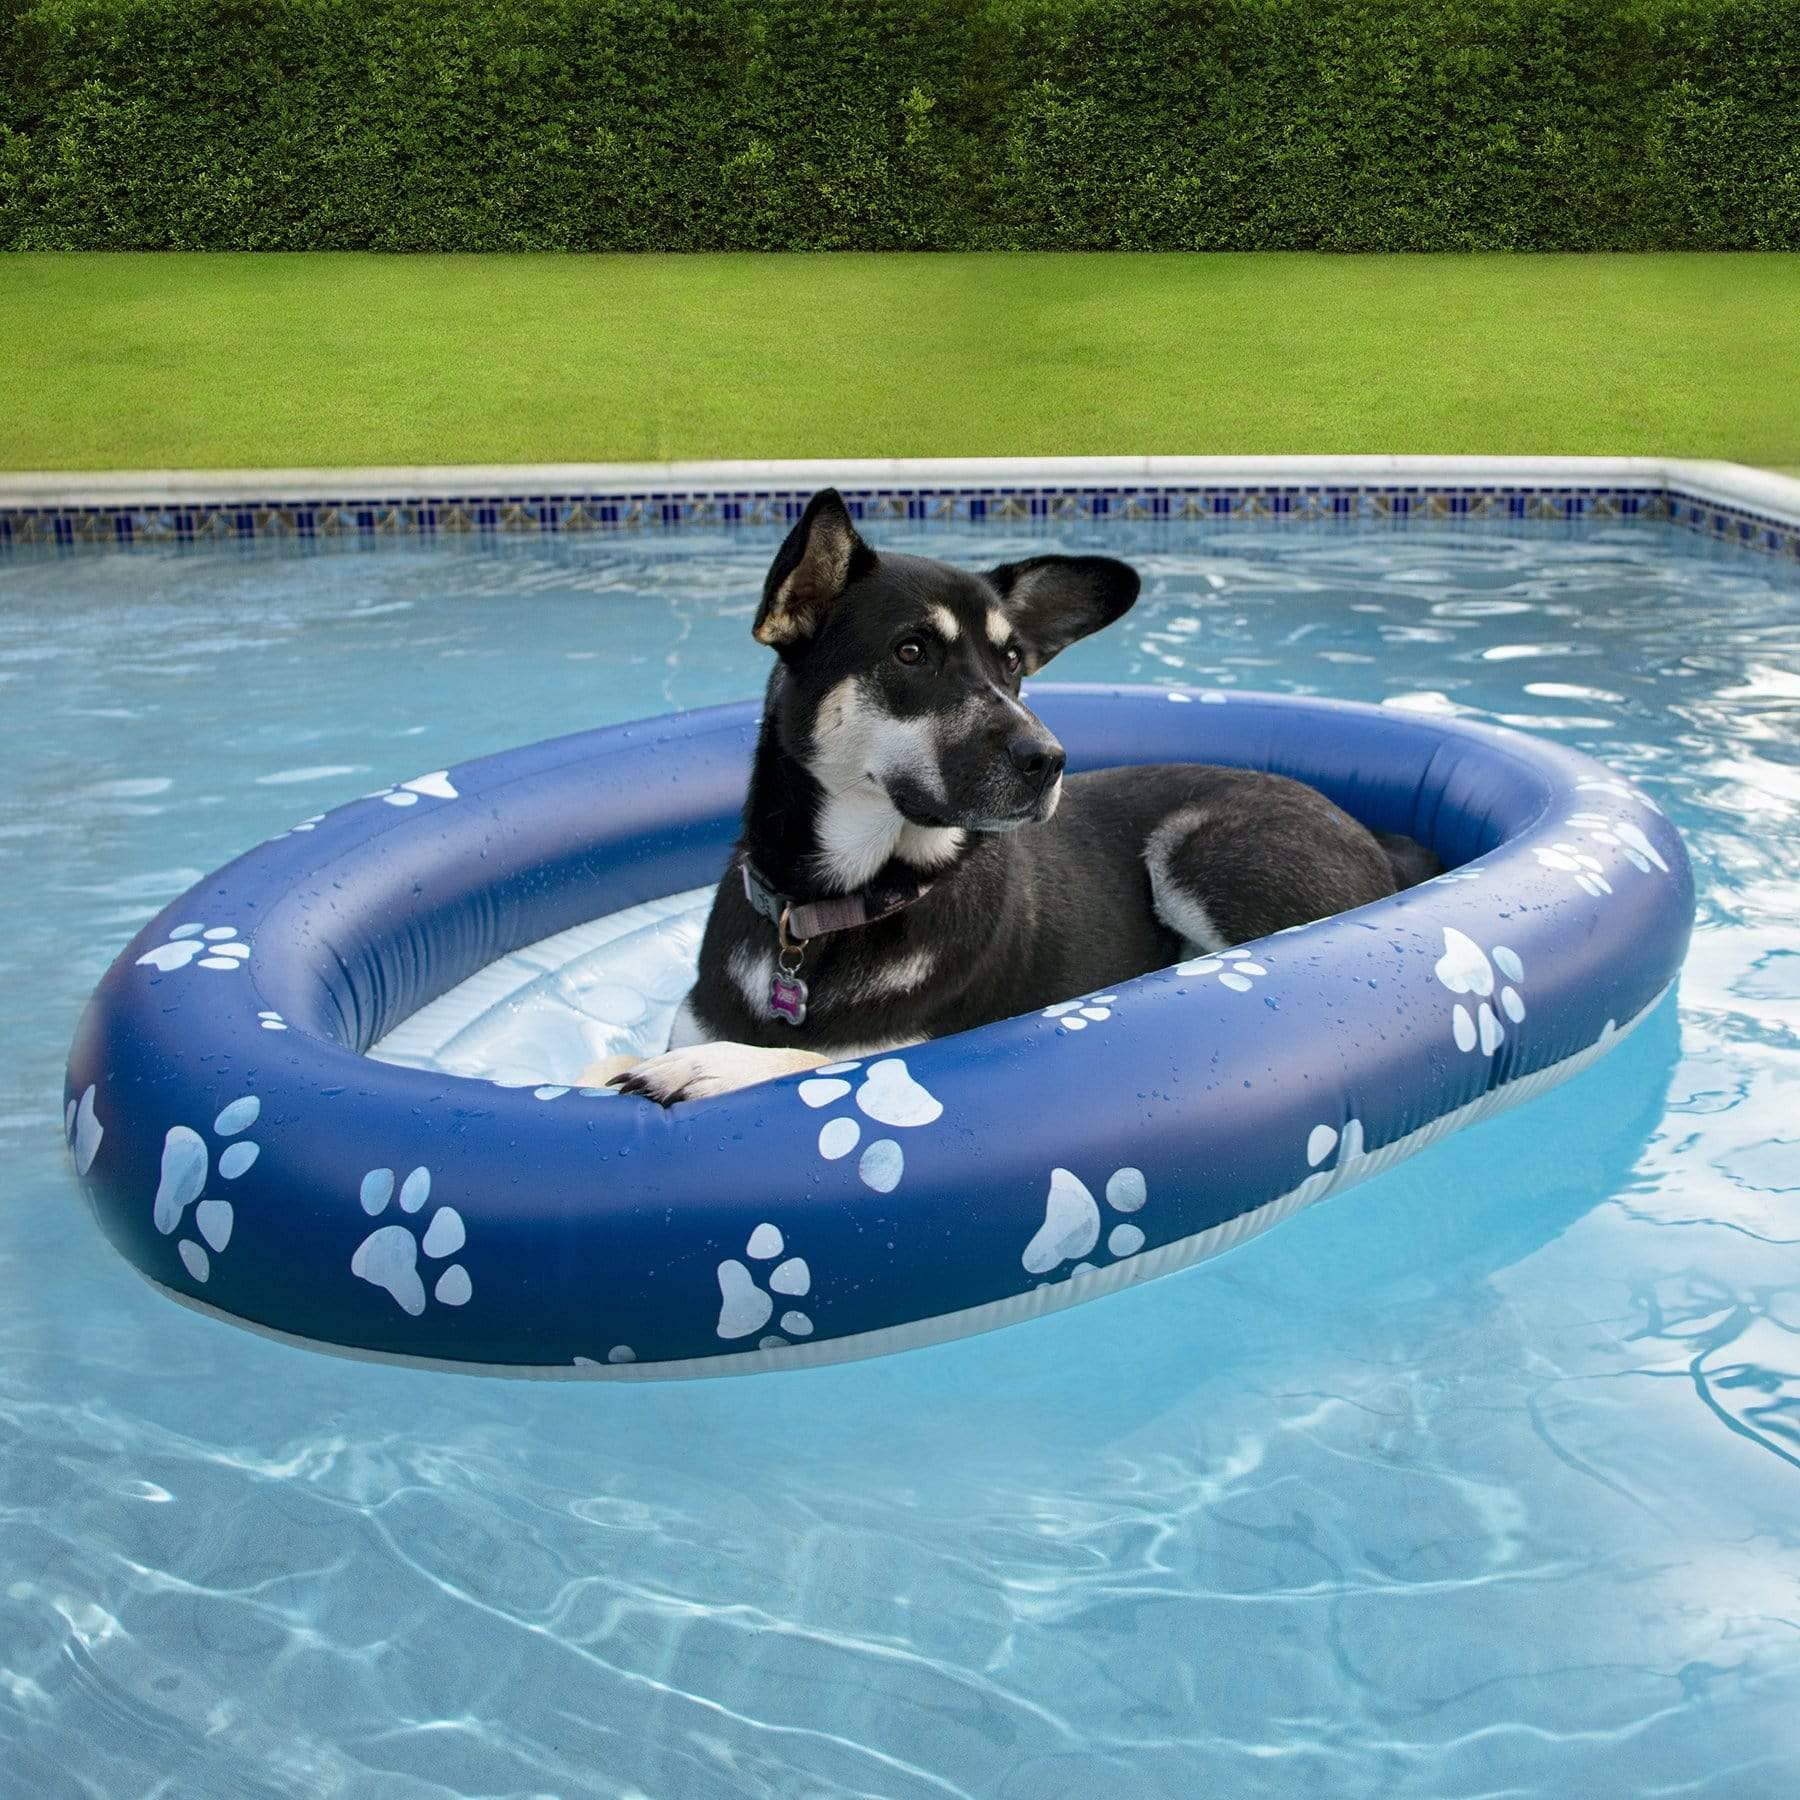 Inflatable Dog Pool Float Large Size